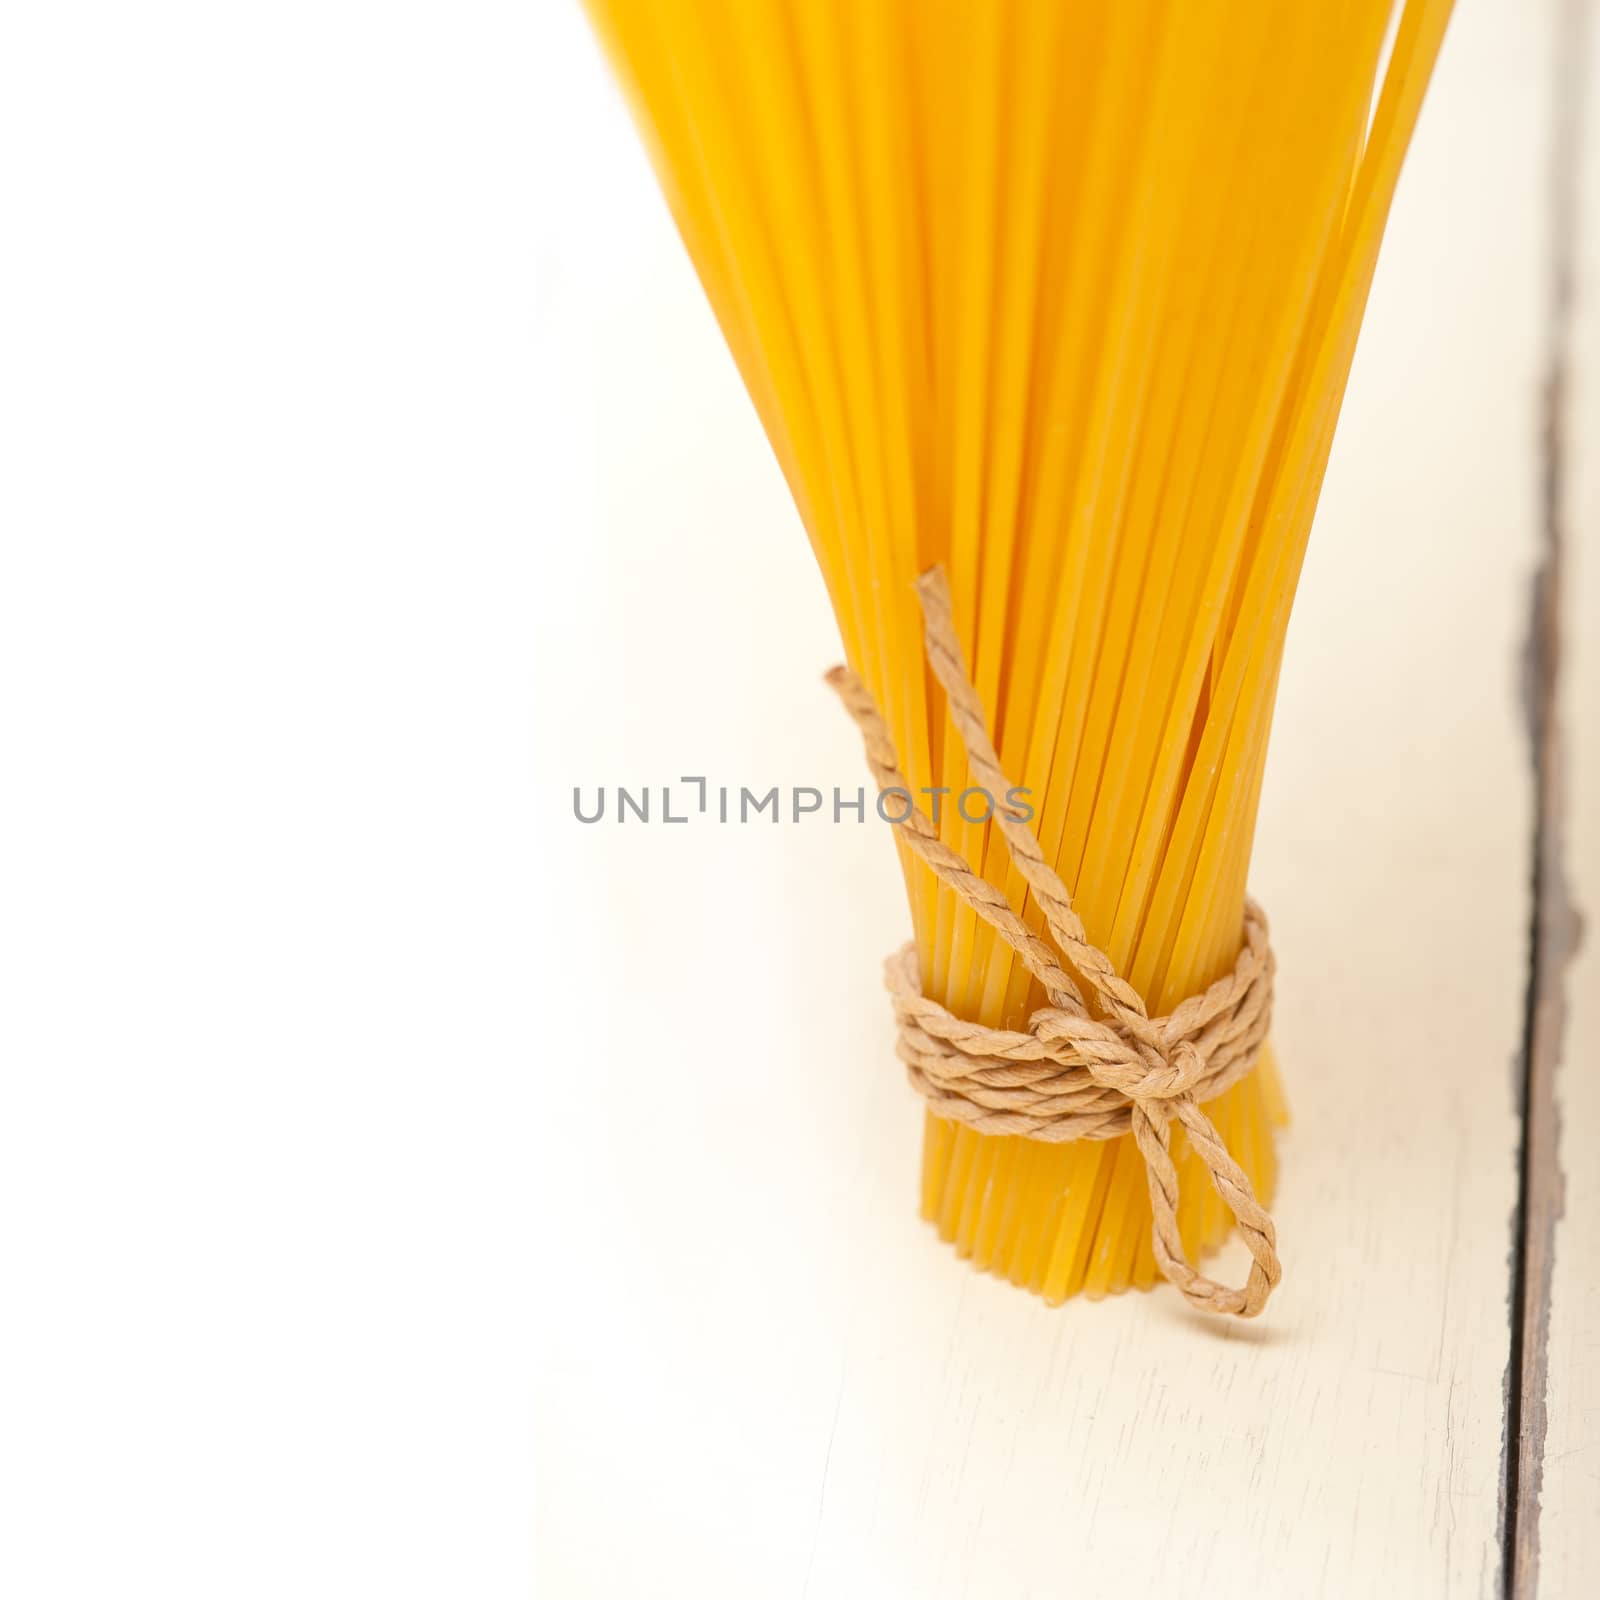 Italian pasta spaghetti by keko64